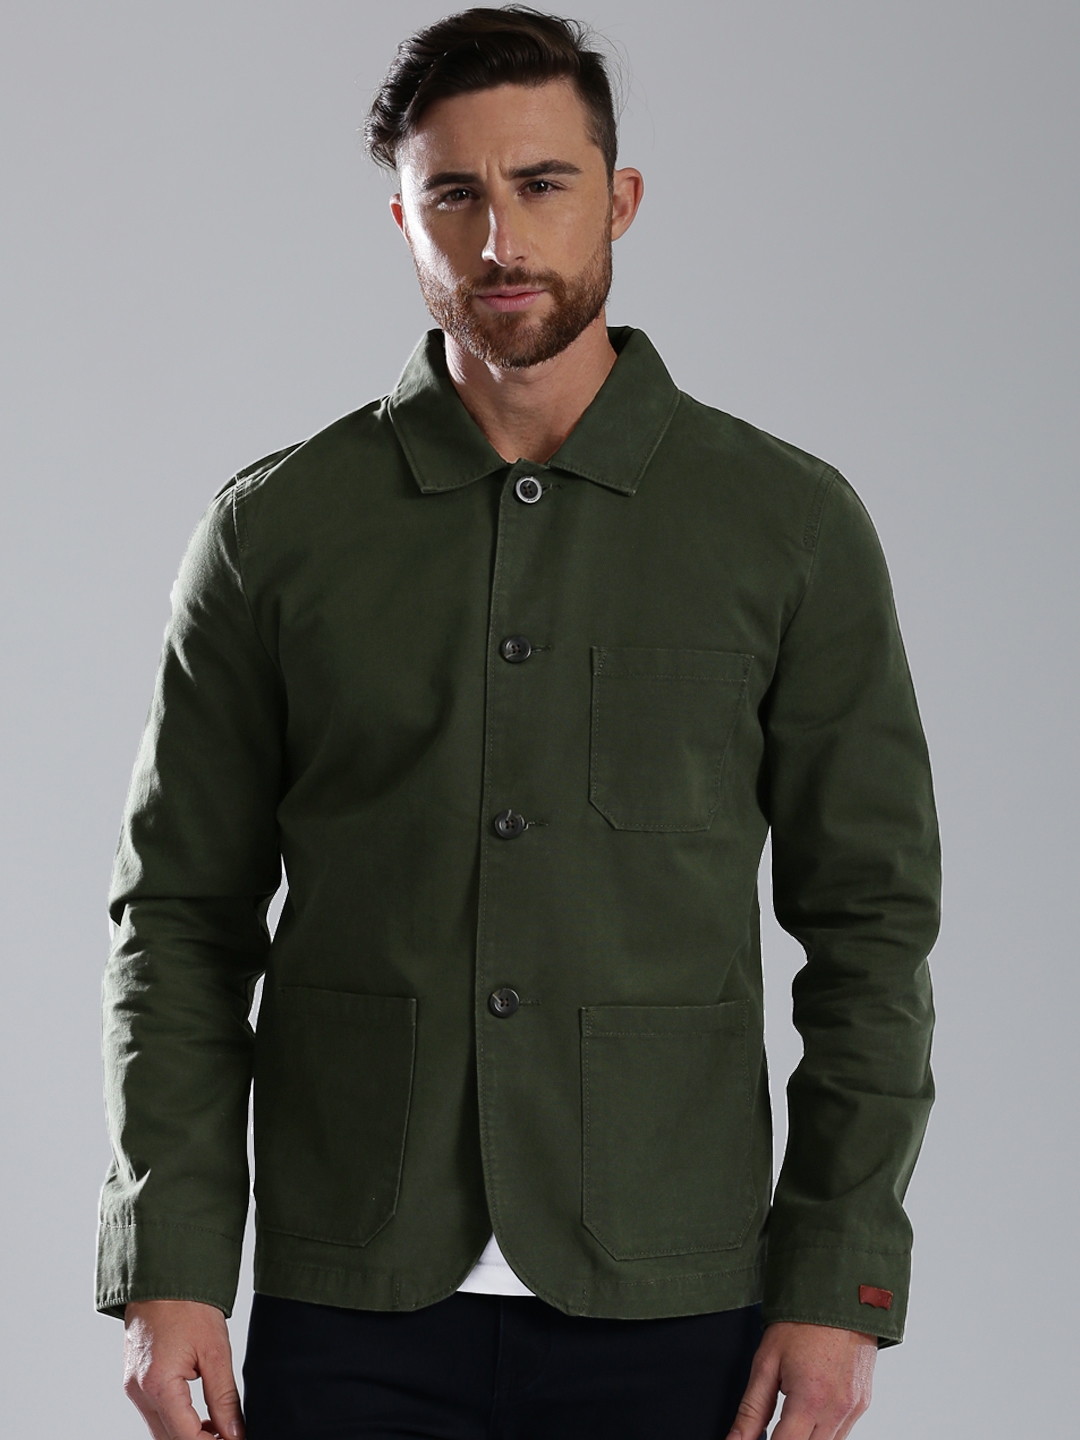 Buy Levi's Olive Green Jacket - Jackets for Men 976369 | Myntra